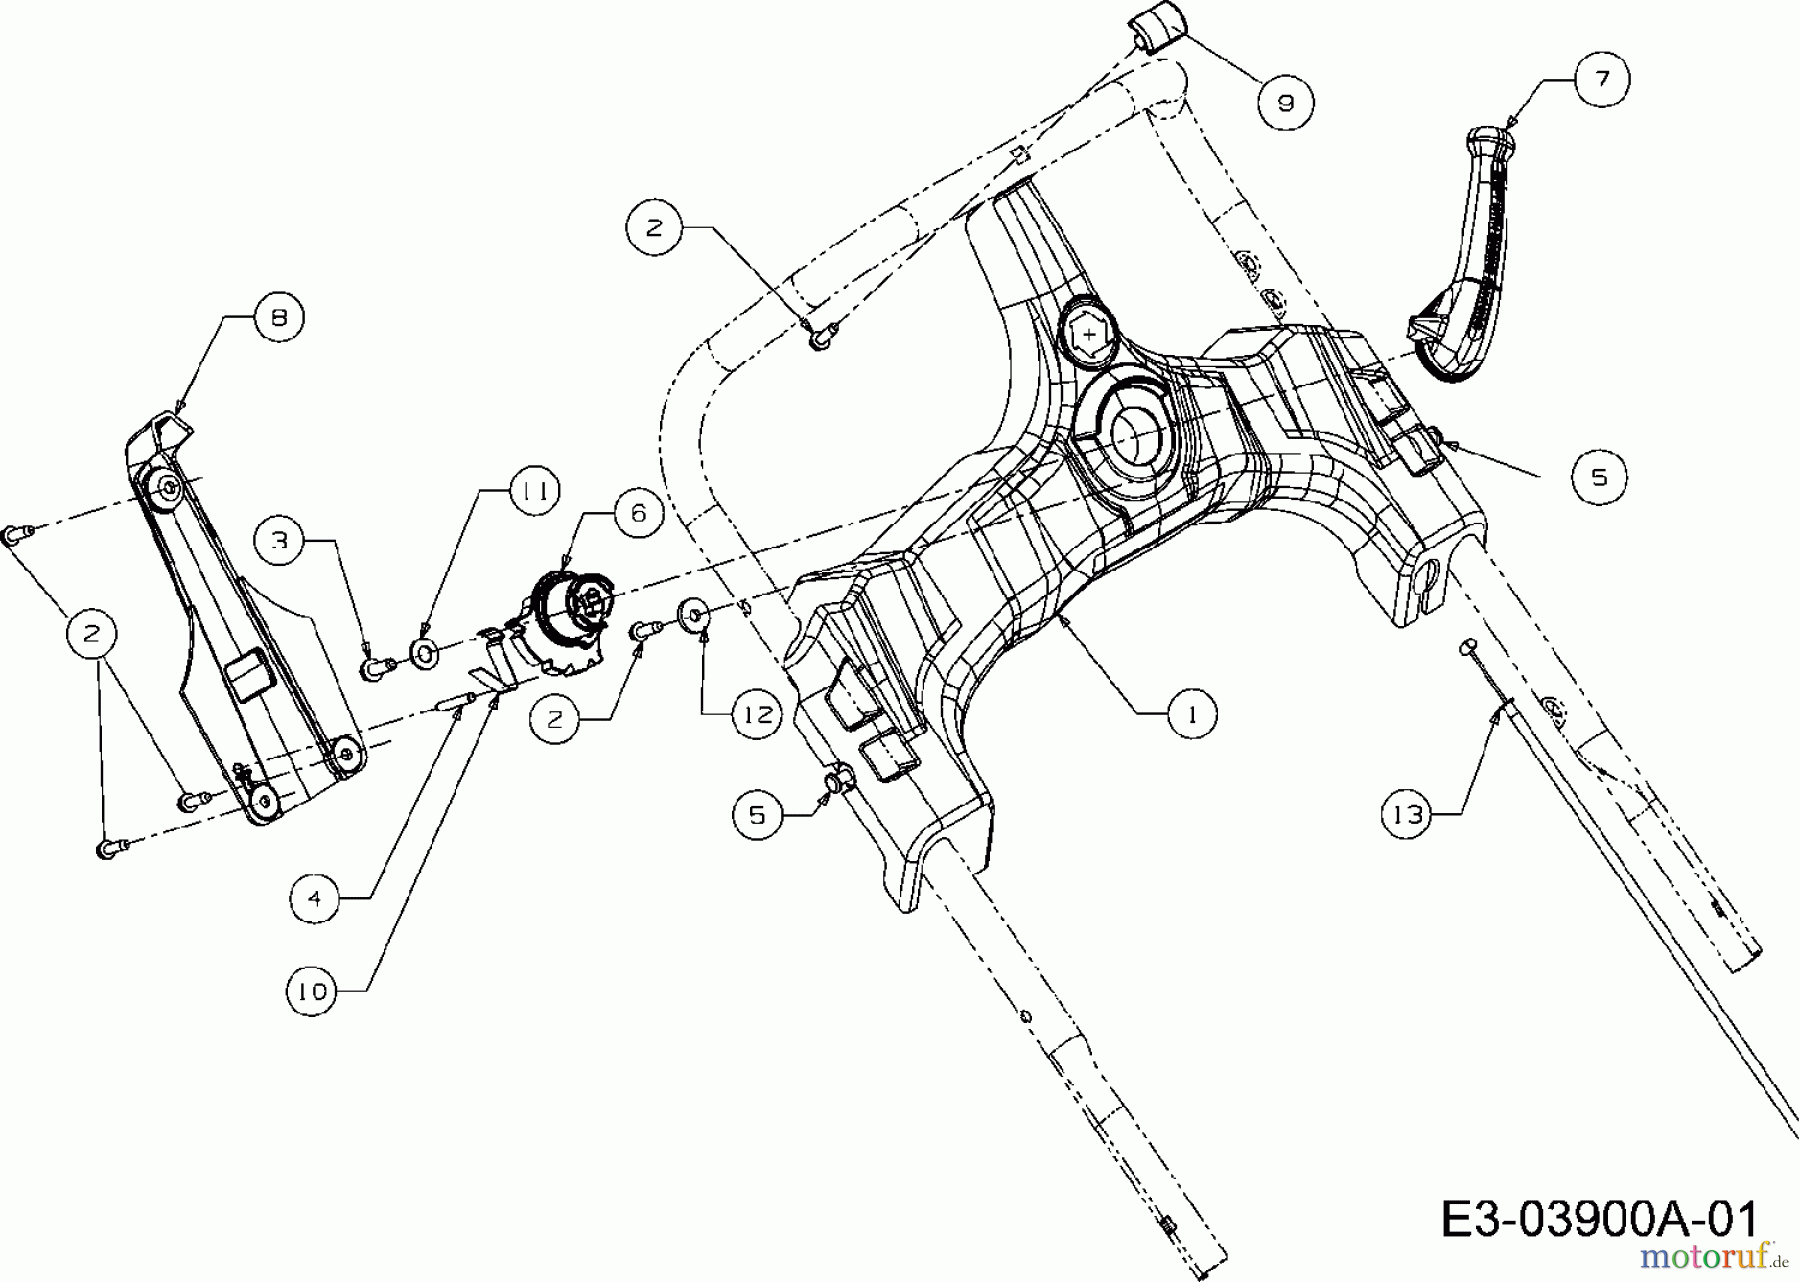  Efco Petrol mower self propelled LR 55 12AI868F637  (2009) Panel